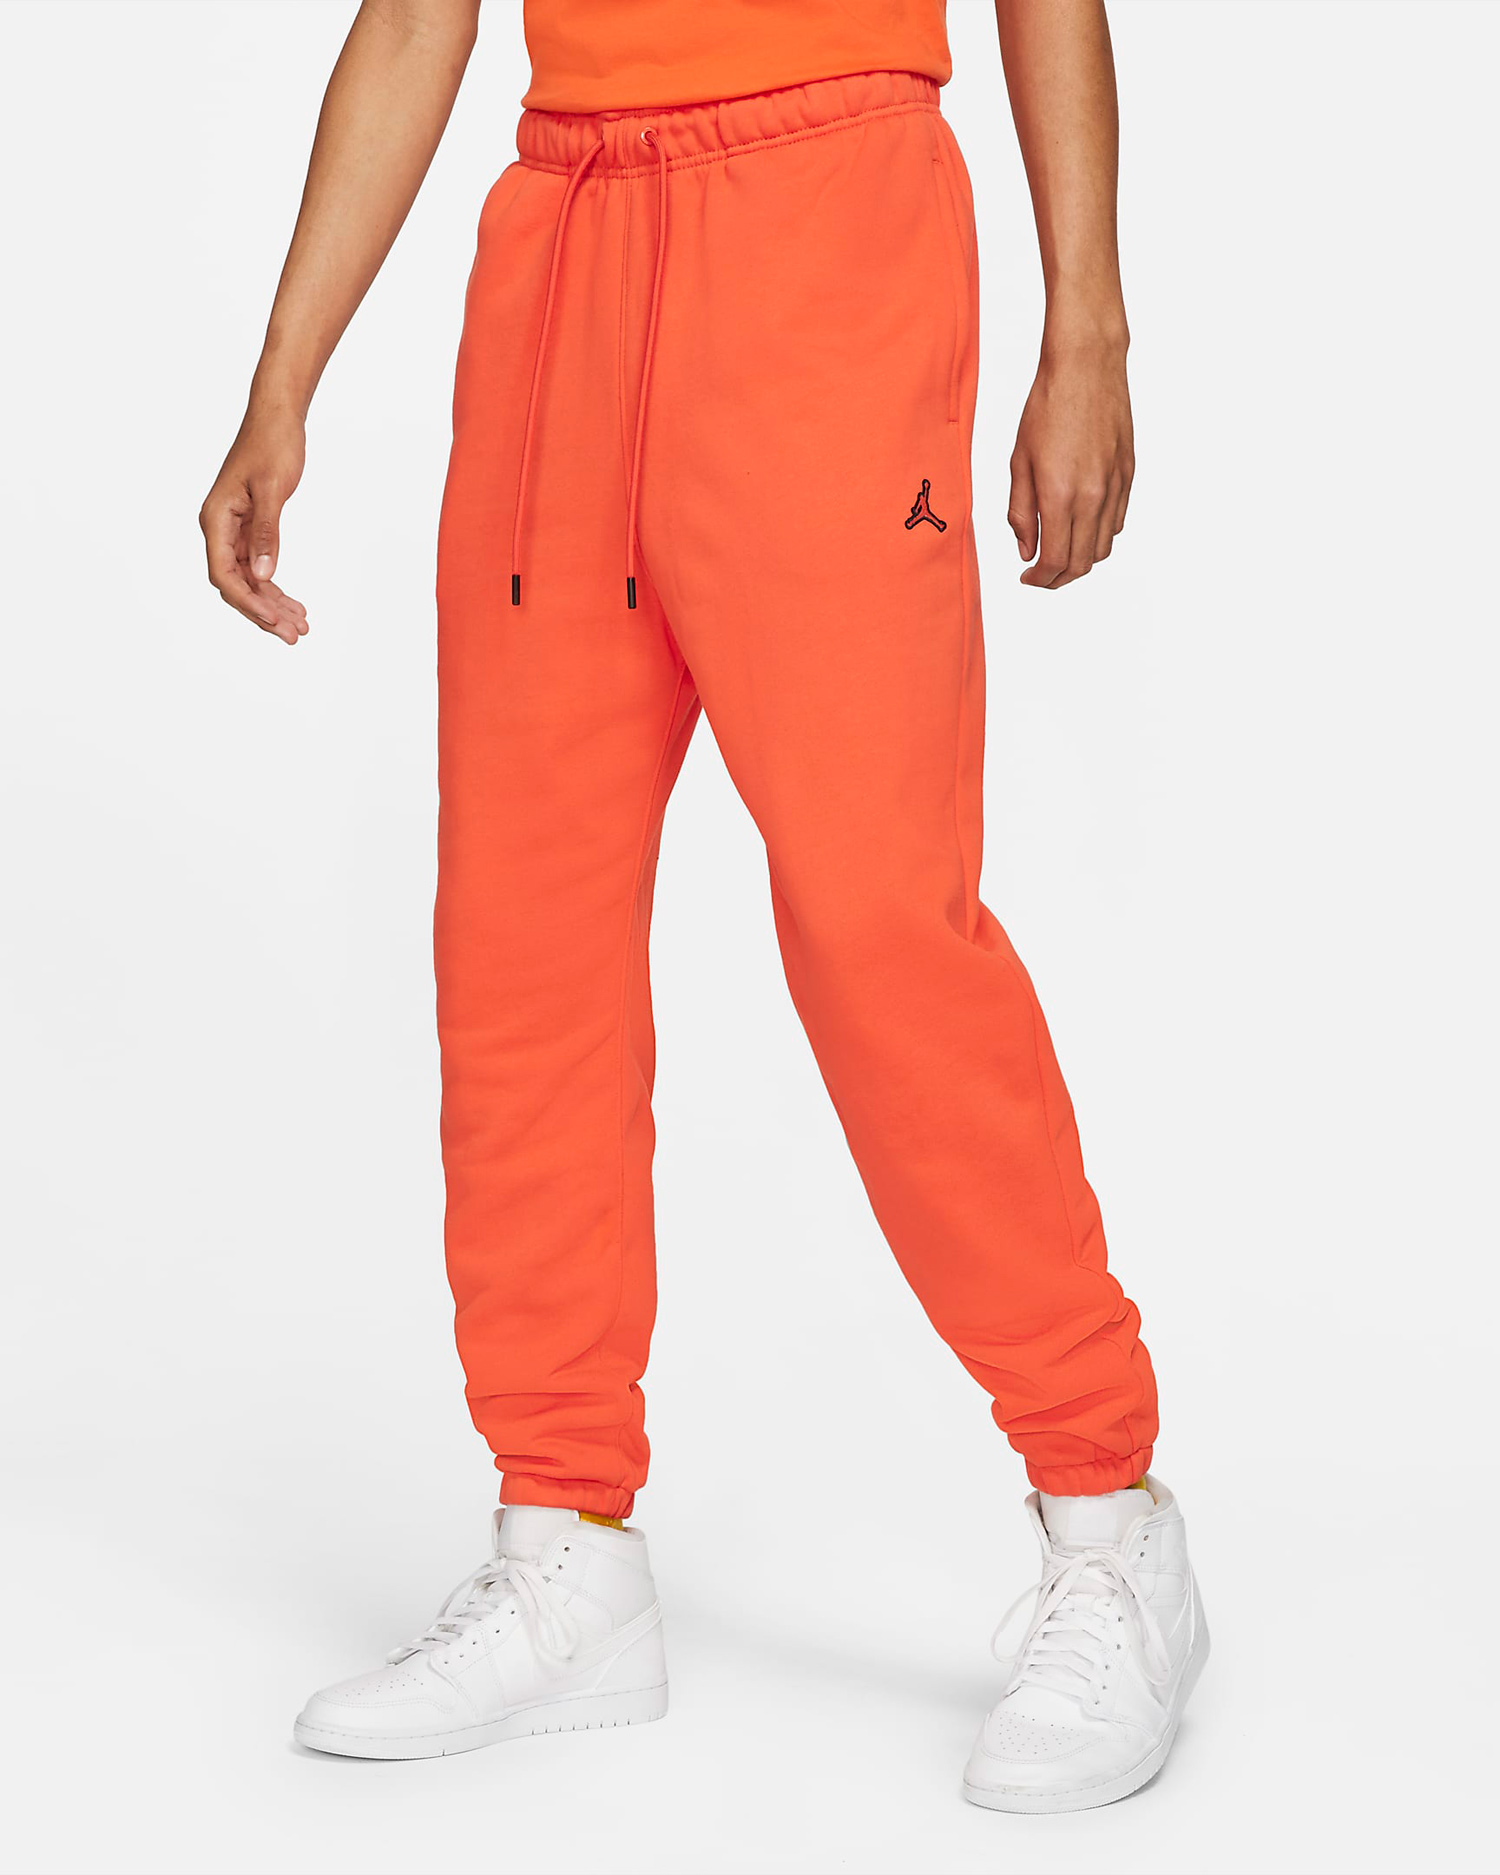 jordan-electro-orange-fleece-pants-1